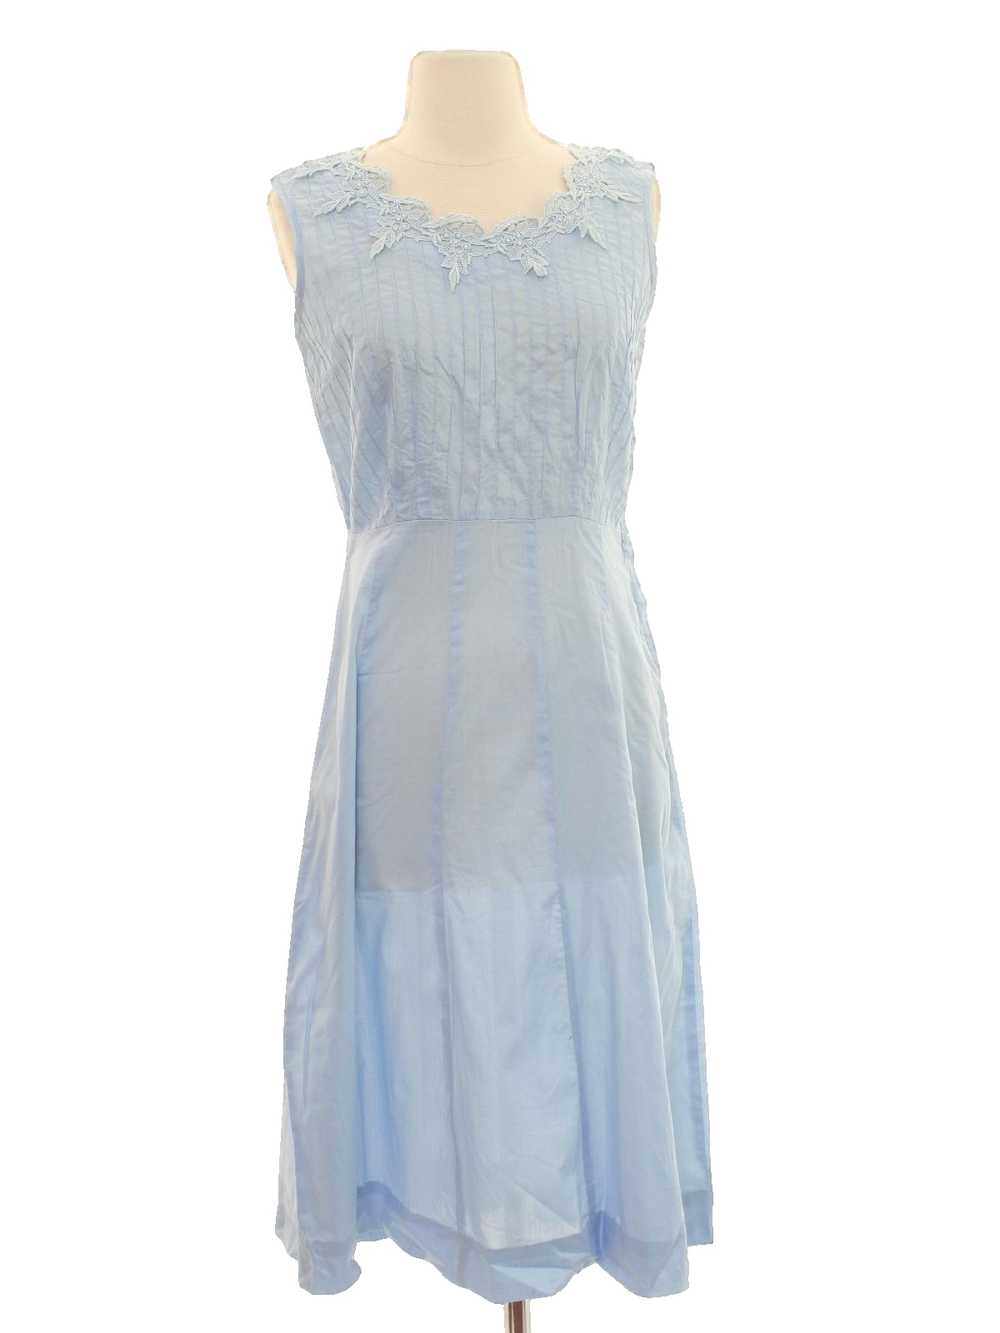 1950's Mynette Cocktail Dress - image 1